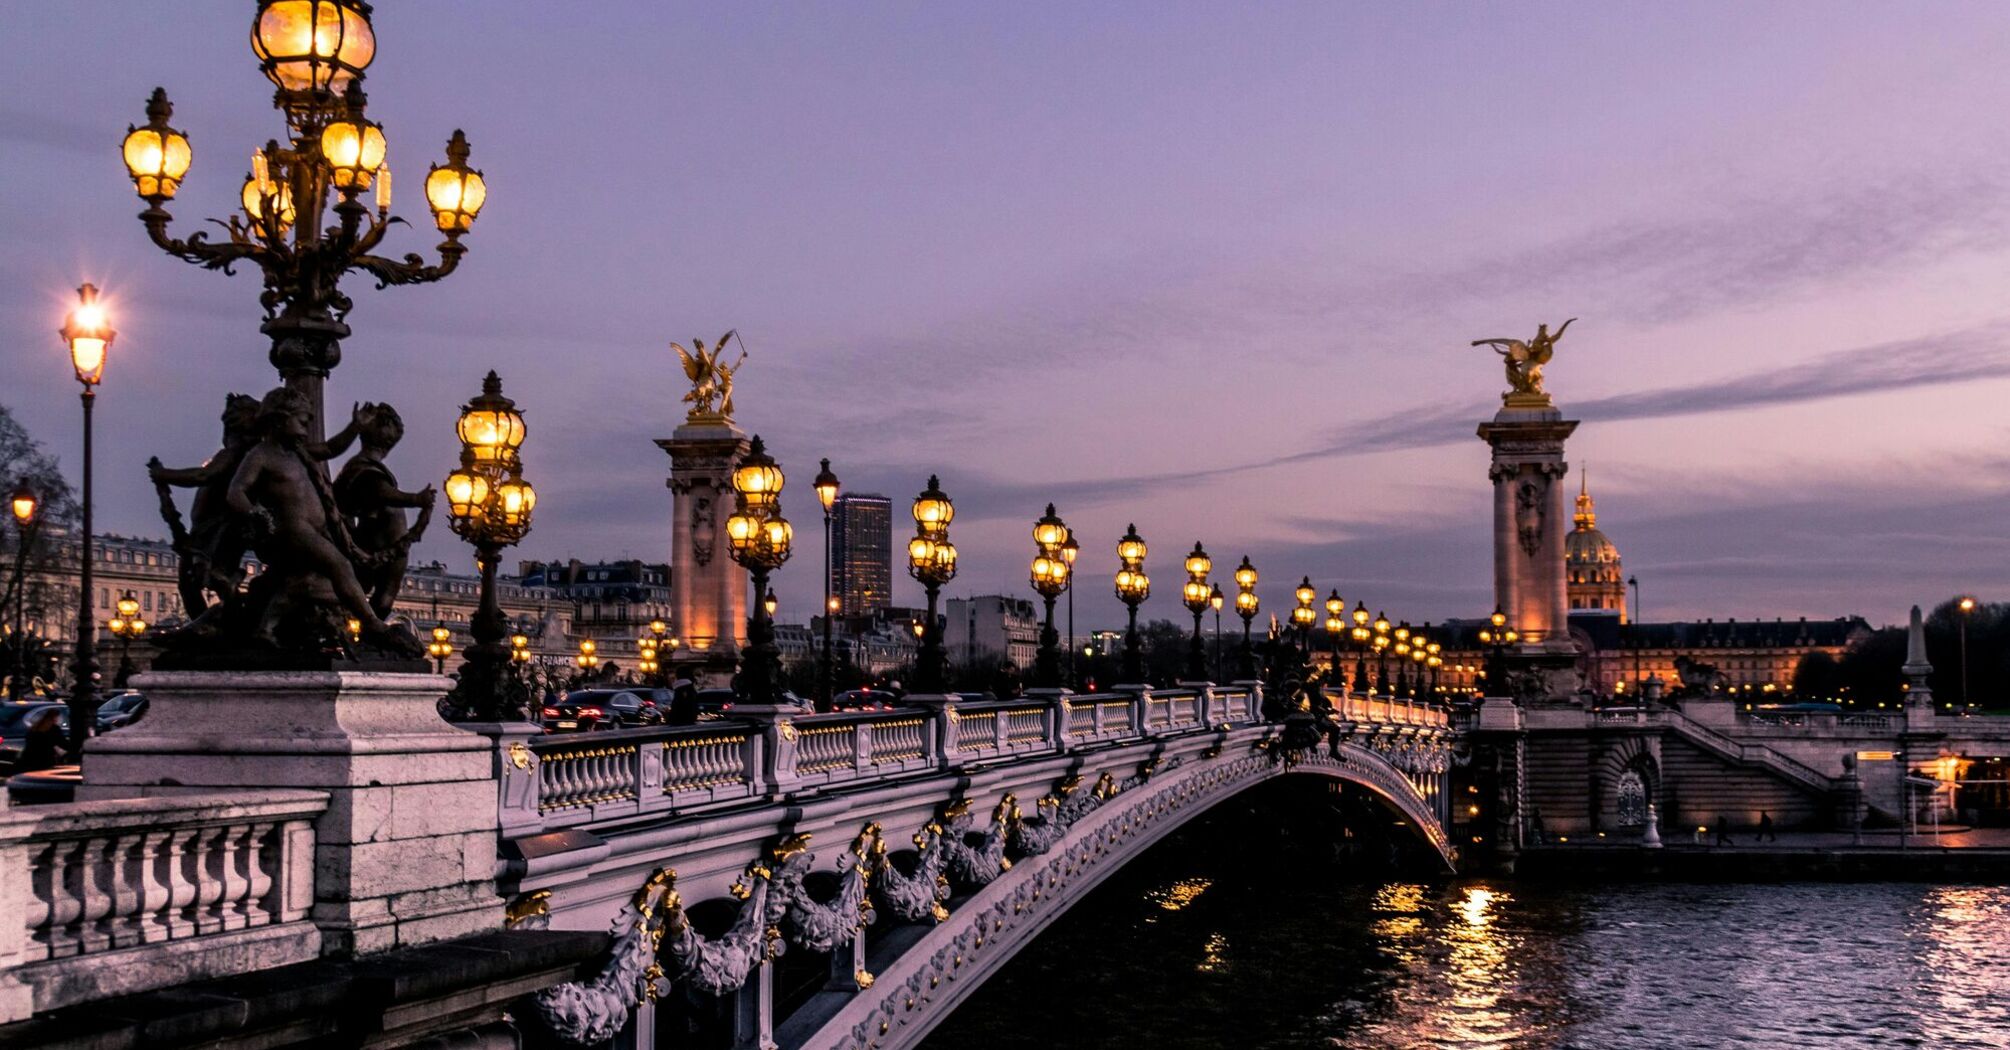 Parisian bridge during night time